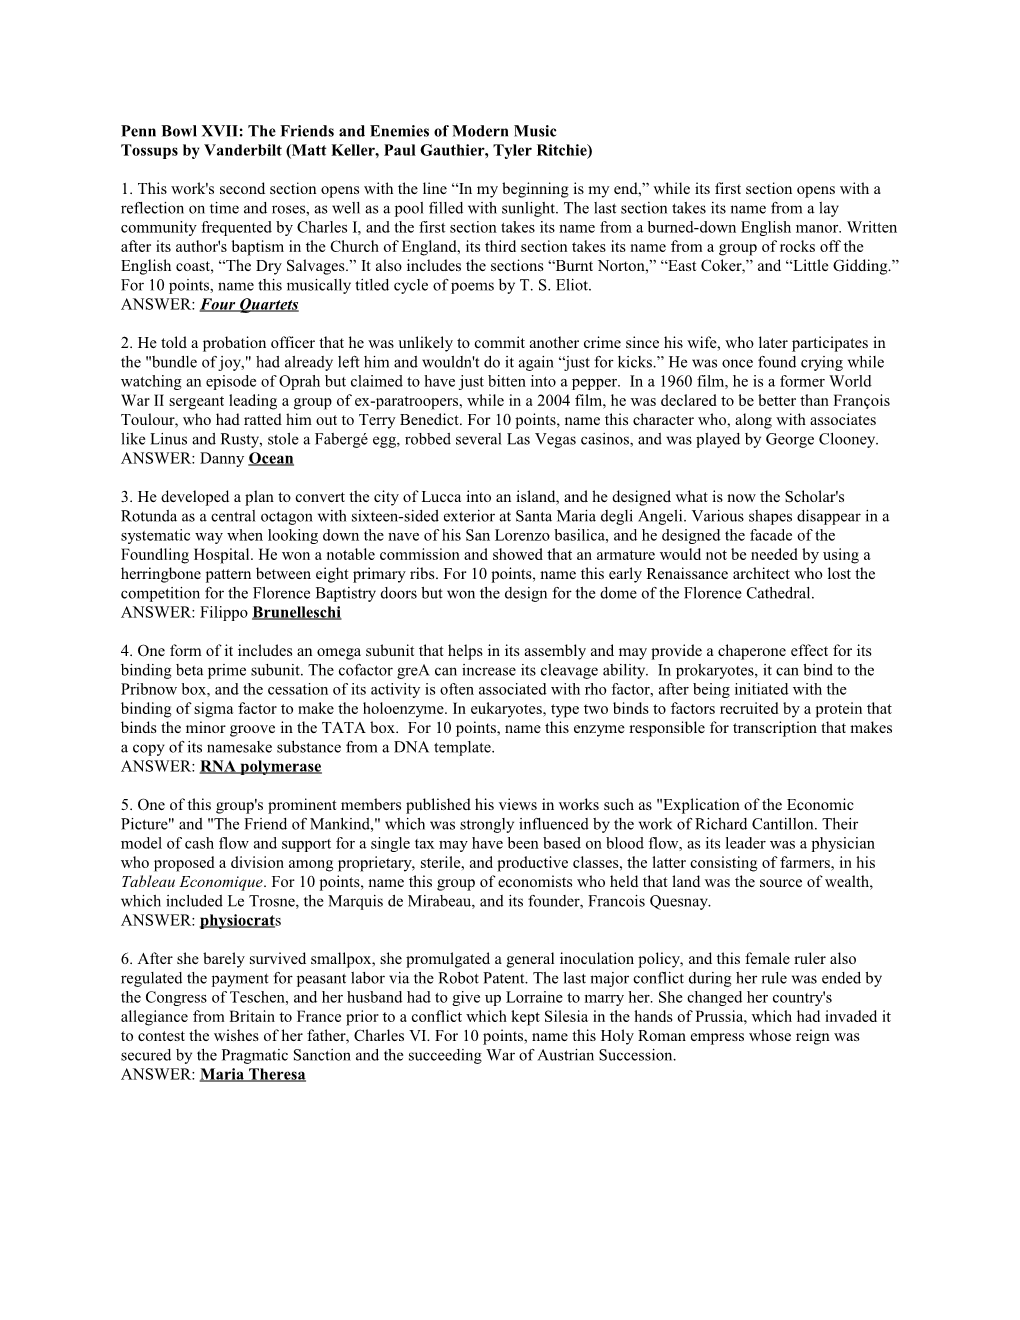 ACF Fall 2005 Questions by Vanderbilt a (Matt Keller, Paul Gauthier, Saurabh Vishnubhakat